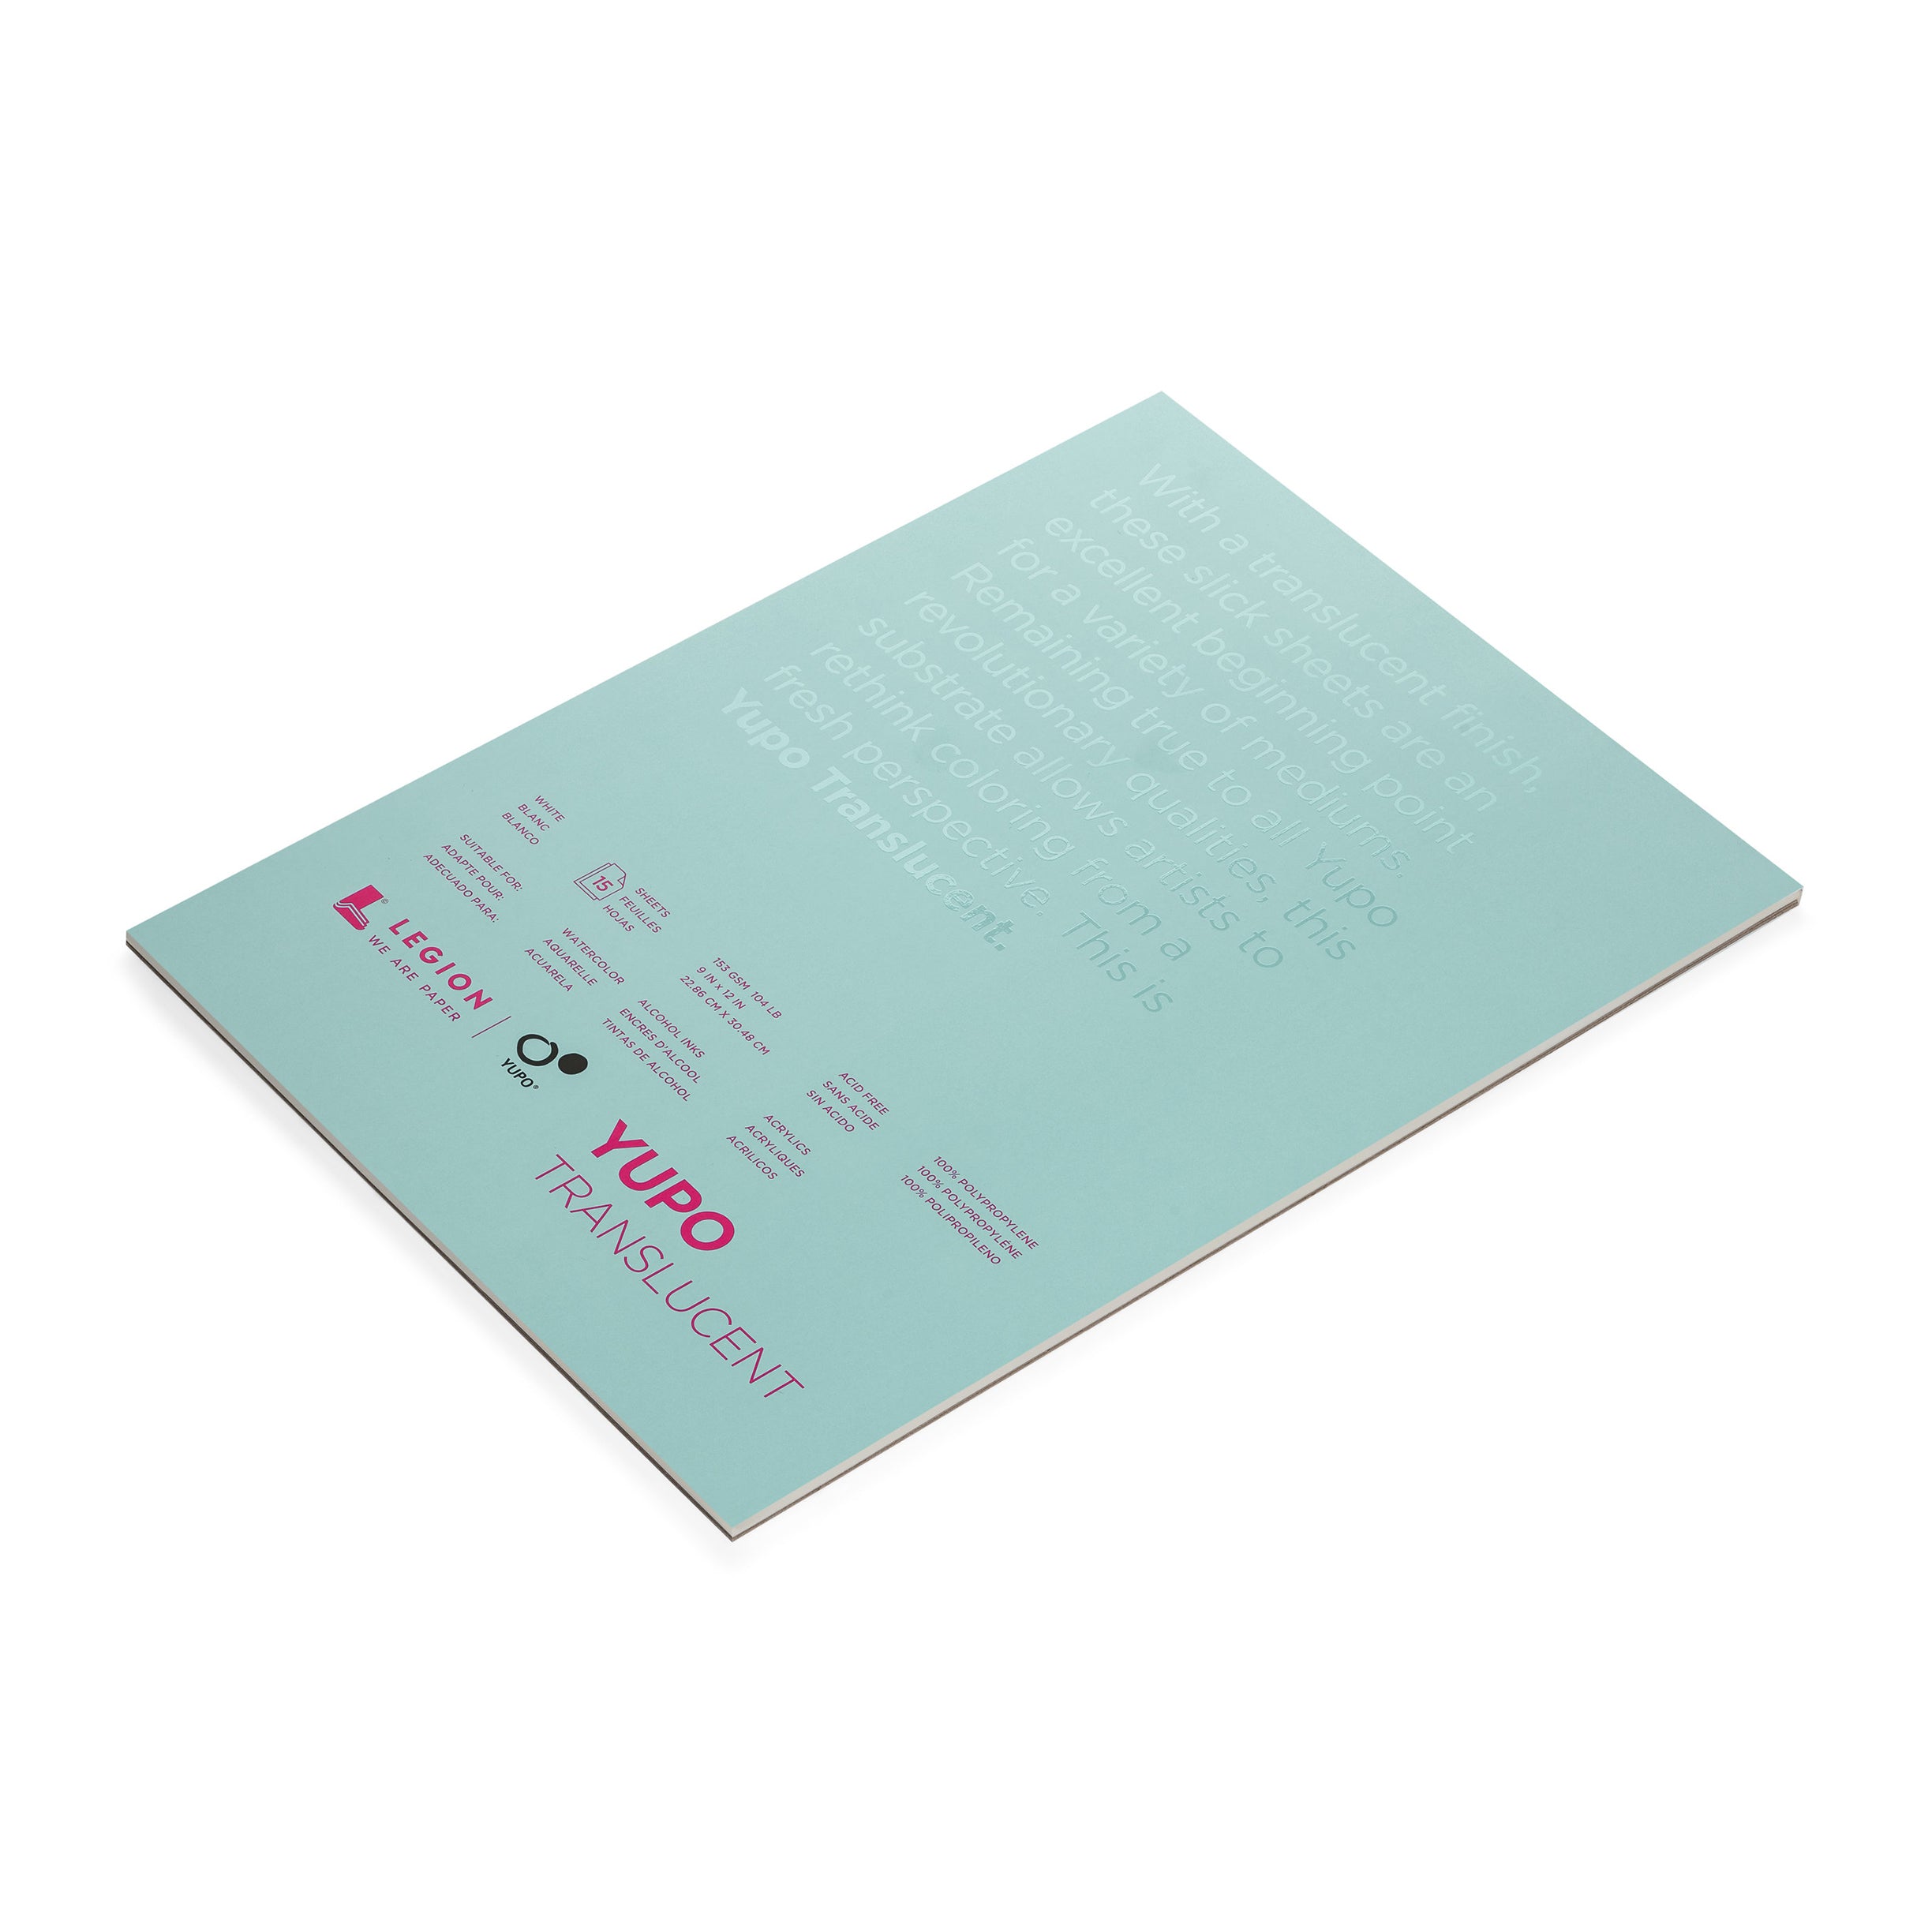 Yupo Translucent Paper Pad by Legion Paper